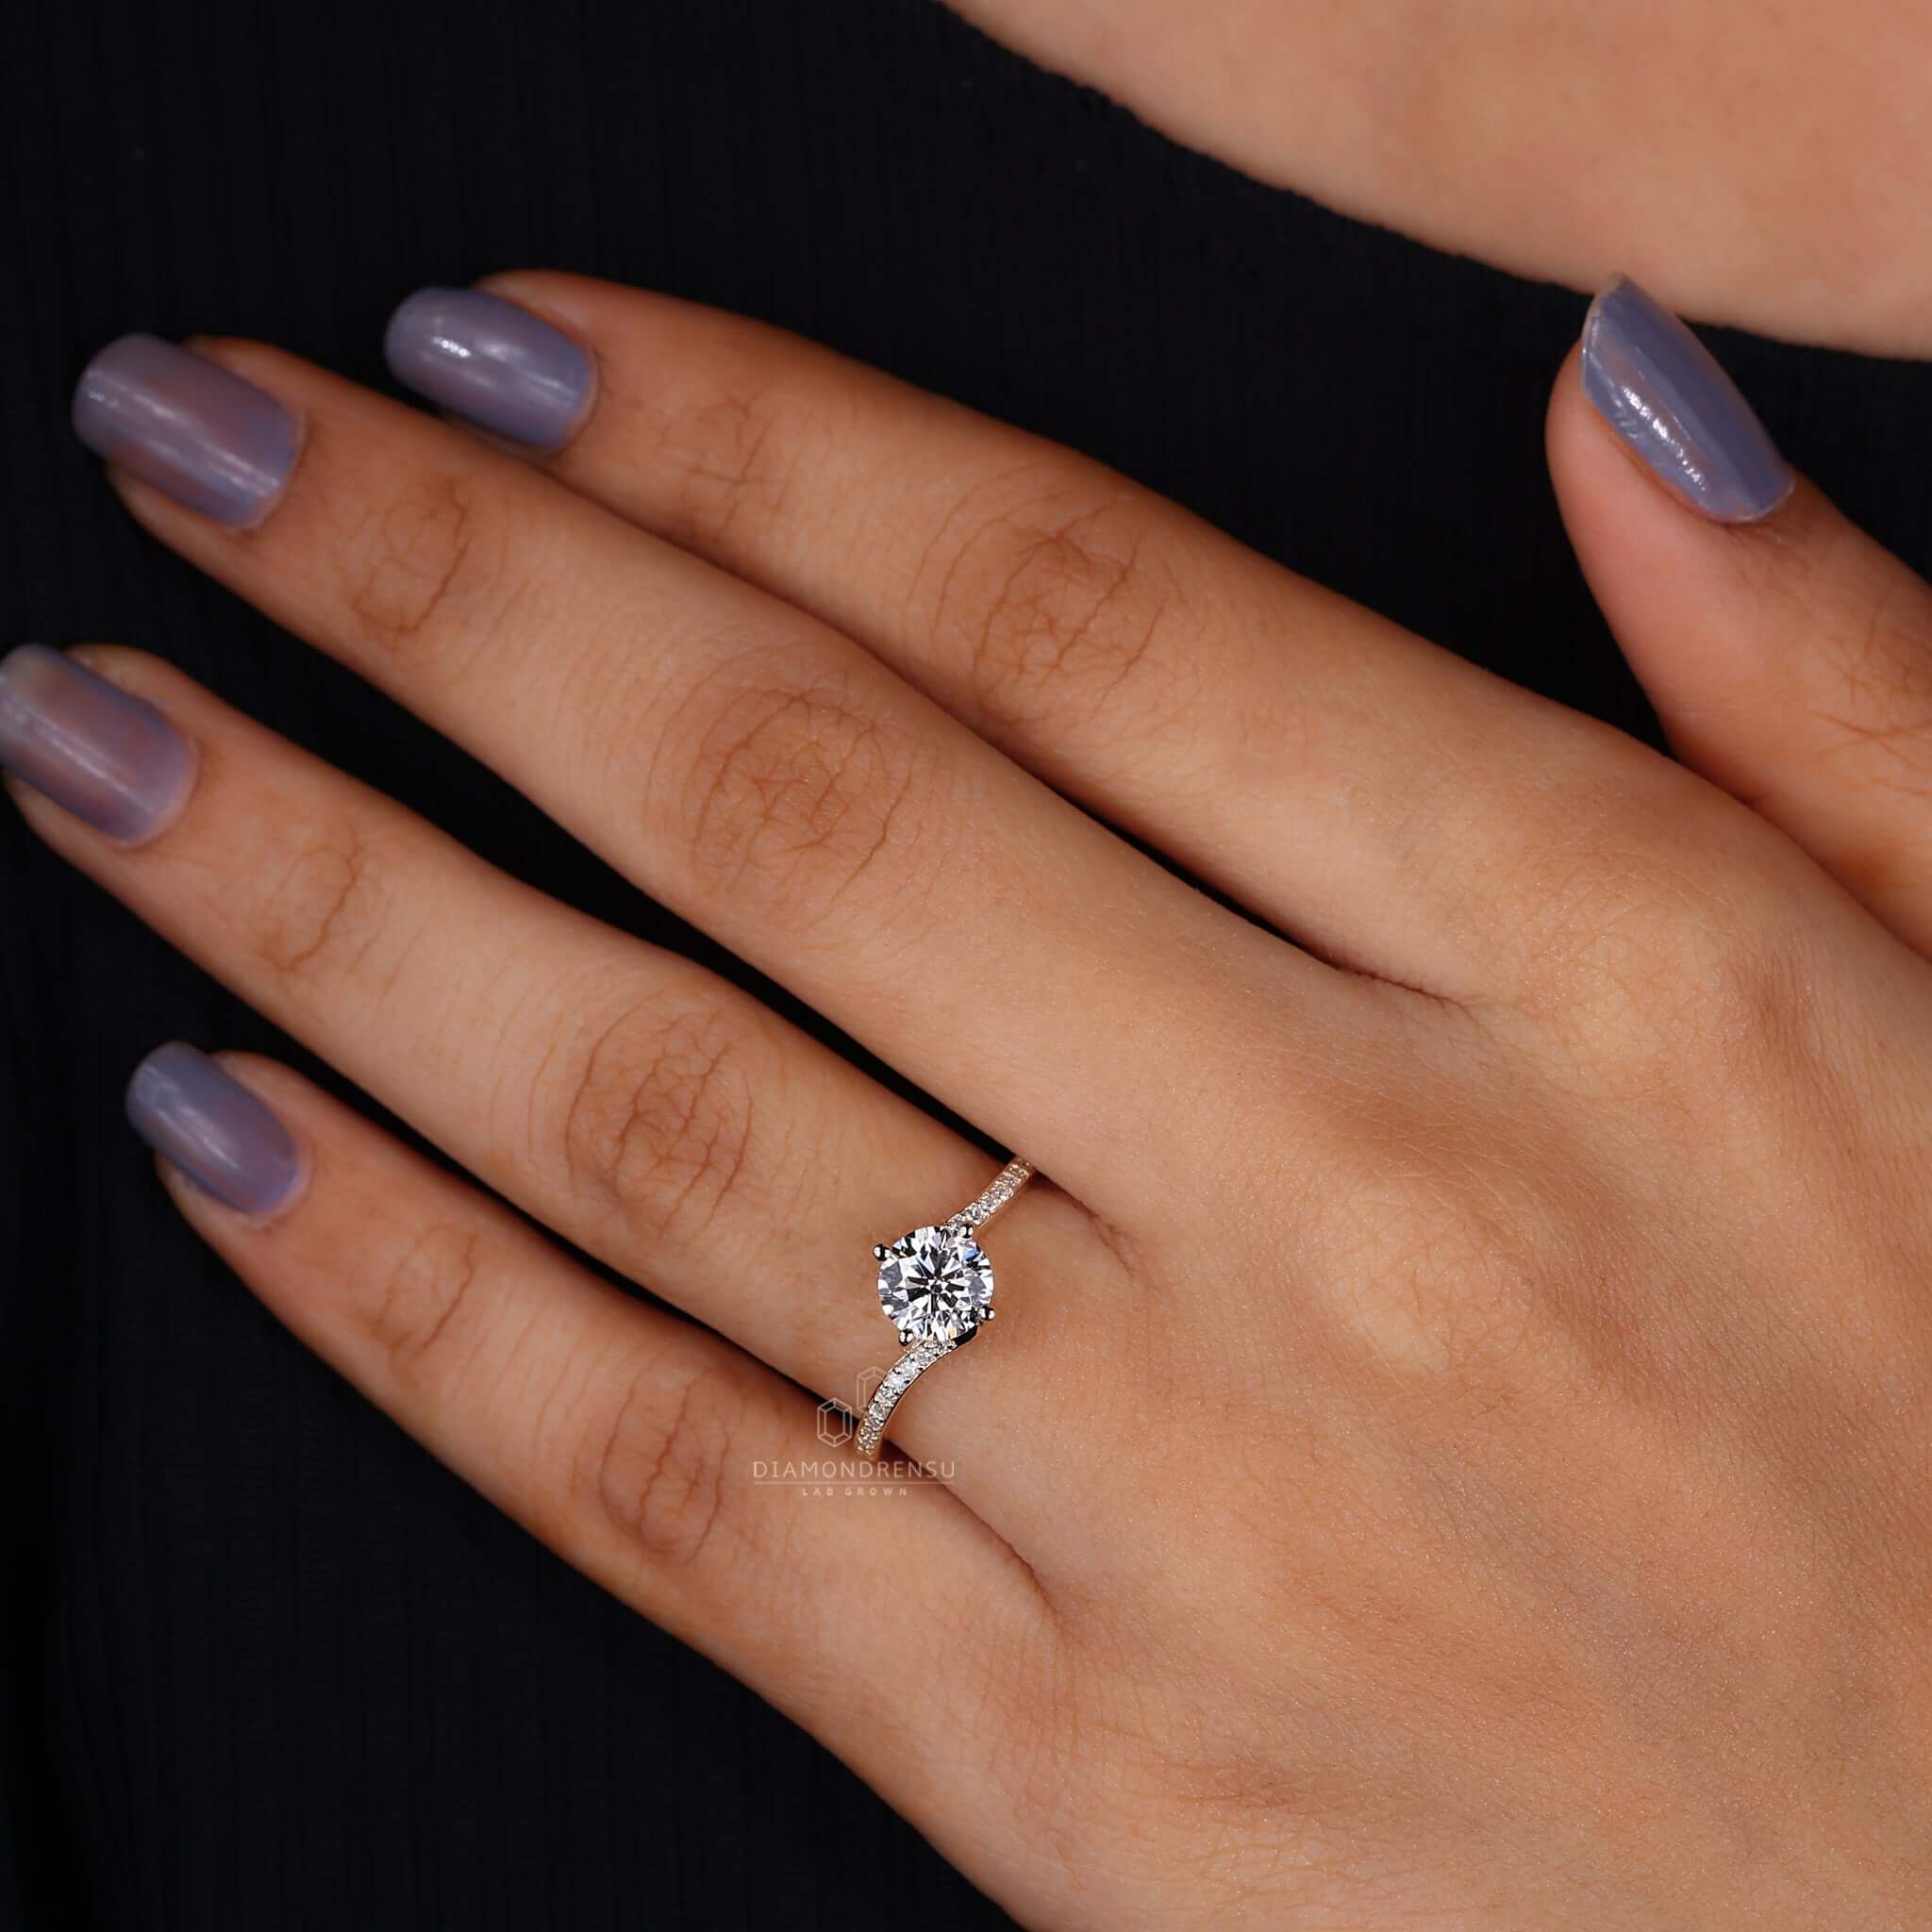 Elegant diamond bypass ring in a beautiful arrangement, blending classic beauty with modern flair.